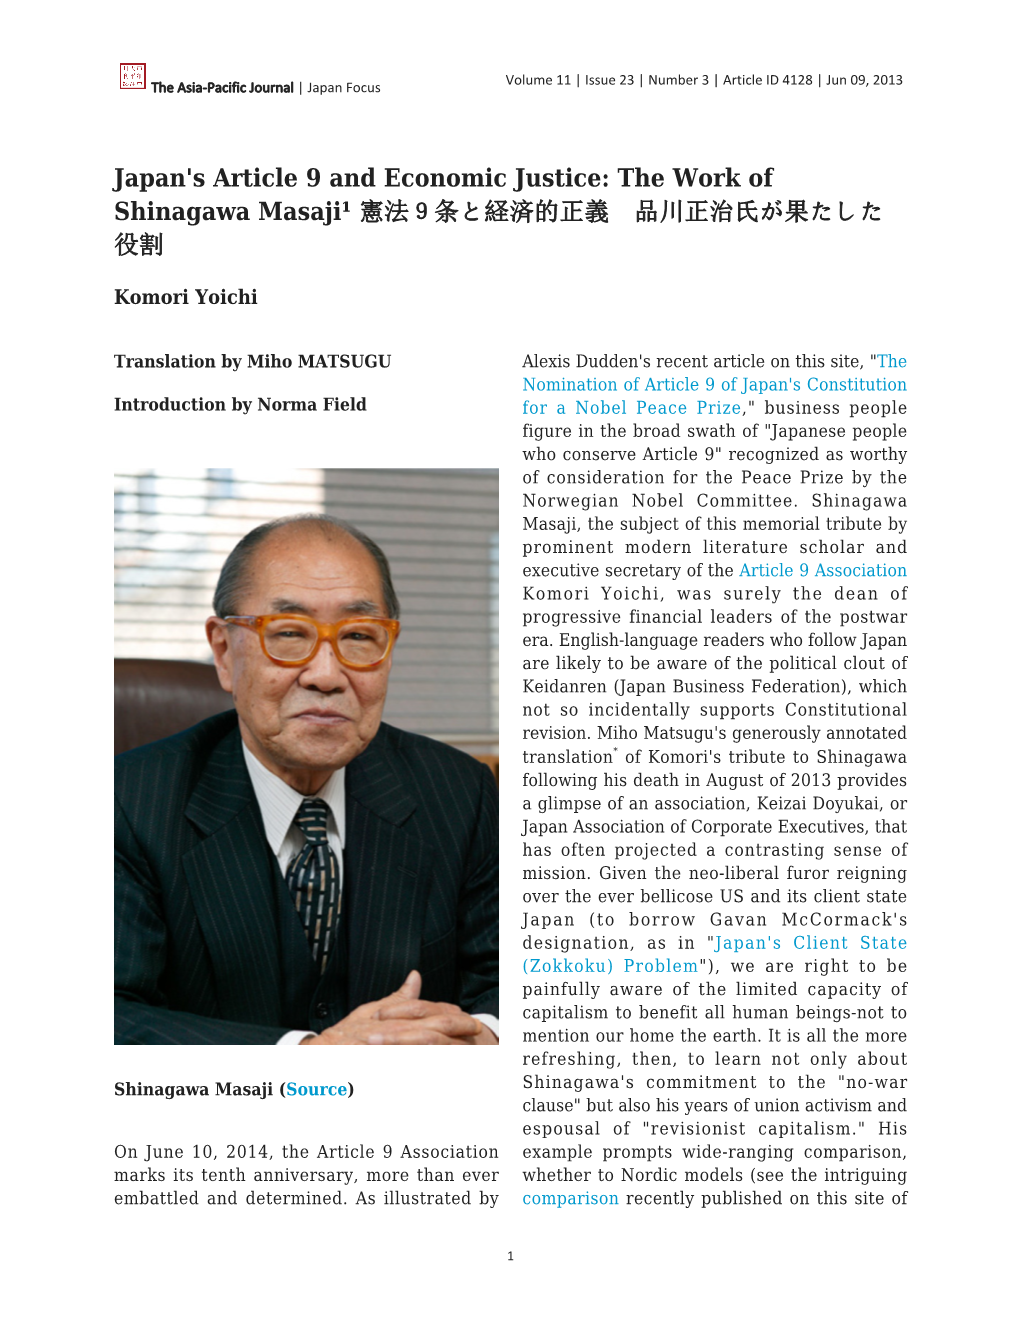 Japan's Article 9 and Economic Justice: the Work of Shinagawa Masaji¹ 憲法９条と経済的正義 品川正治氏が果たした 役割